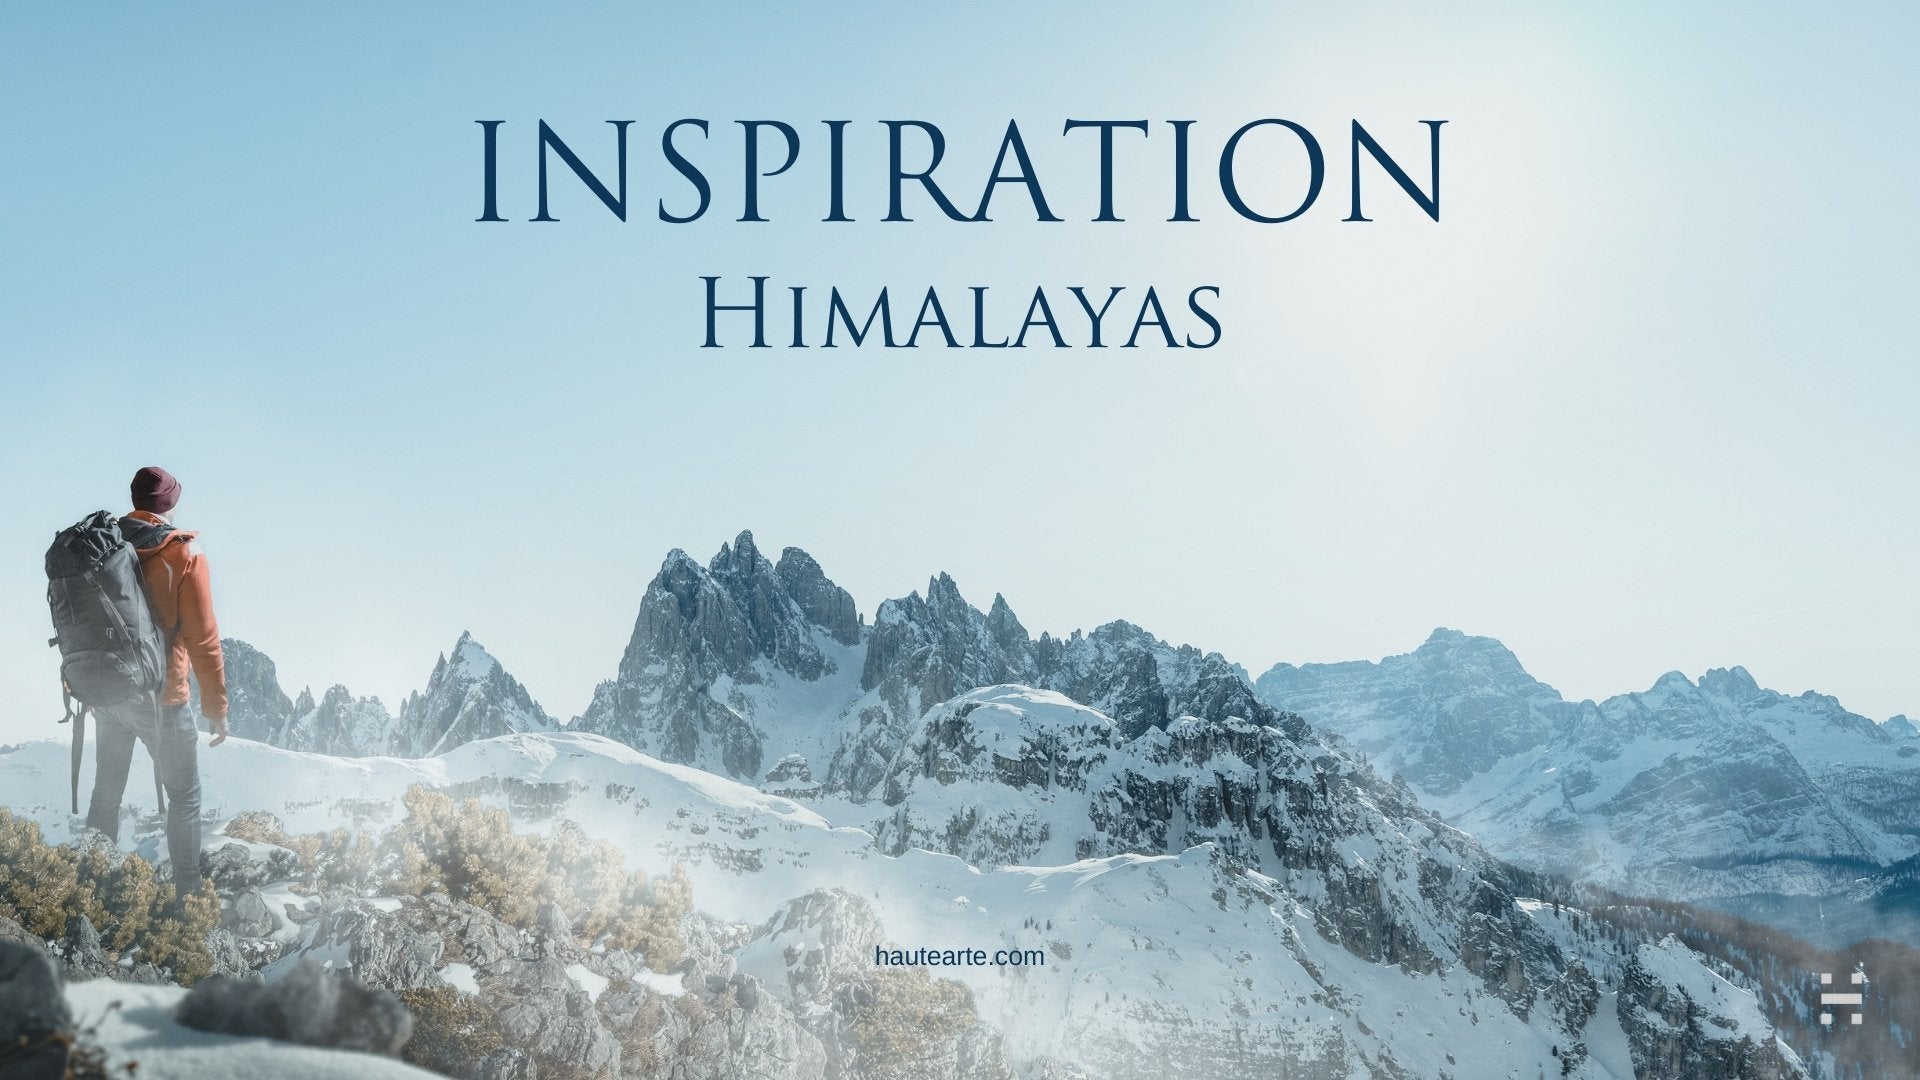 Design Inspiration from Himalayas